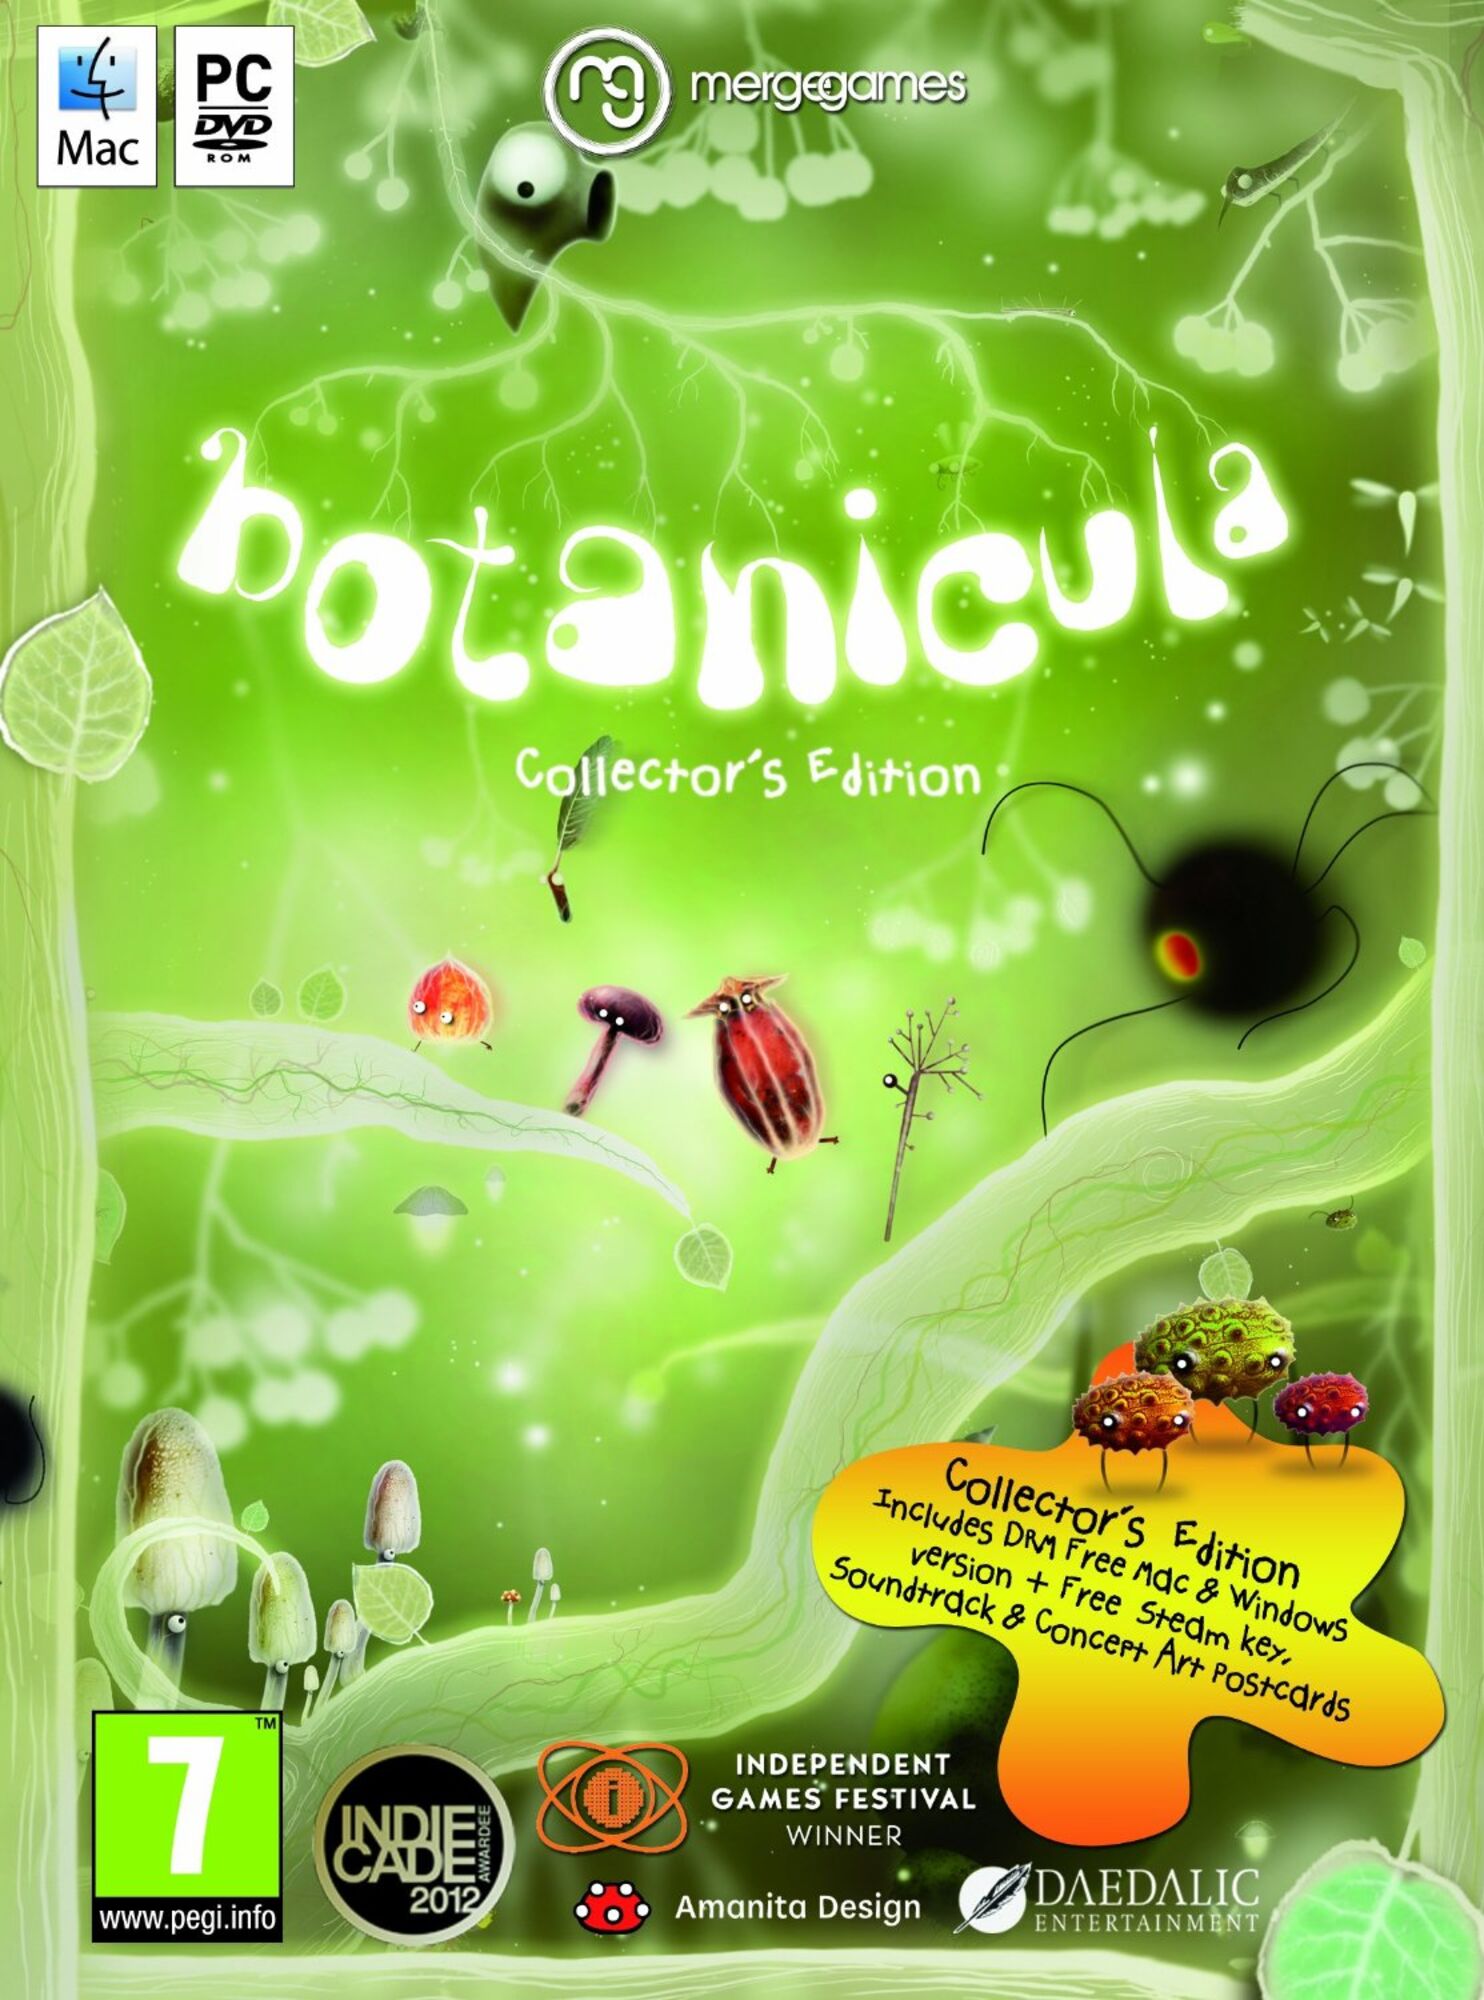 download botanicula game for free